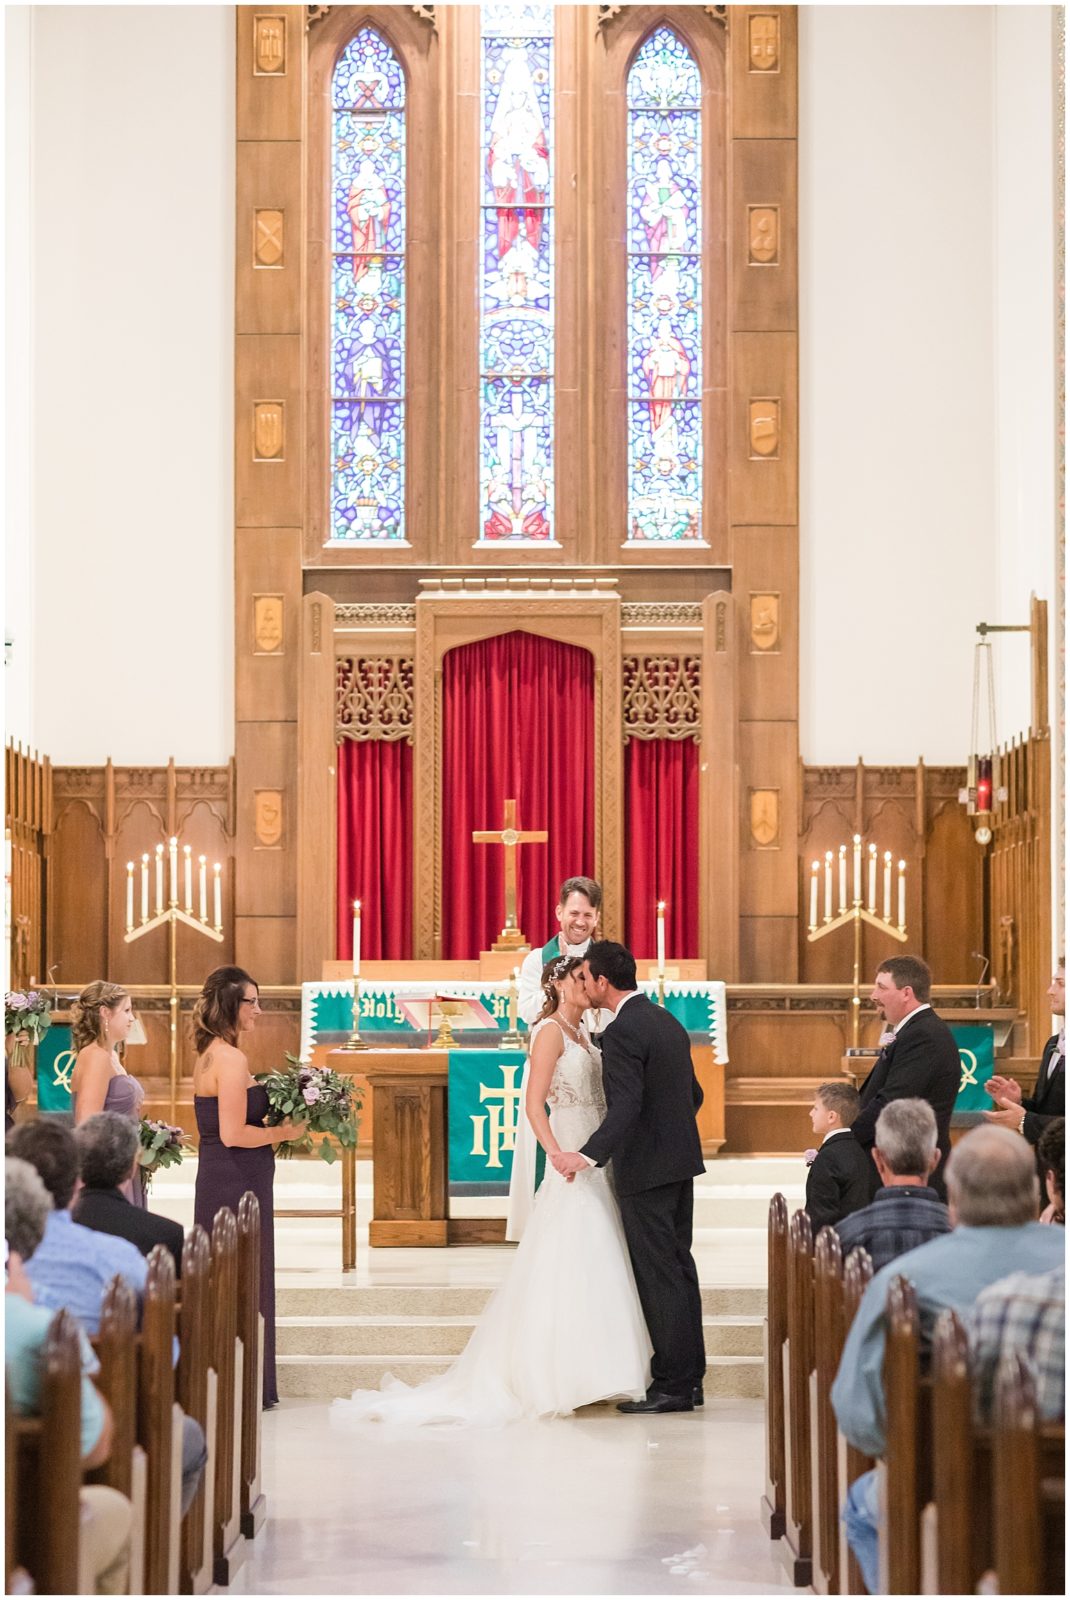 Ceremony | Wedding in Orange City, Iowa shot by Jessica Brees Photo & Video